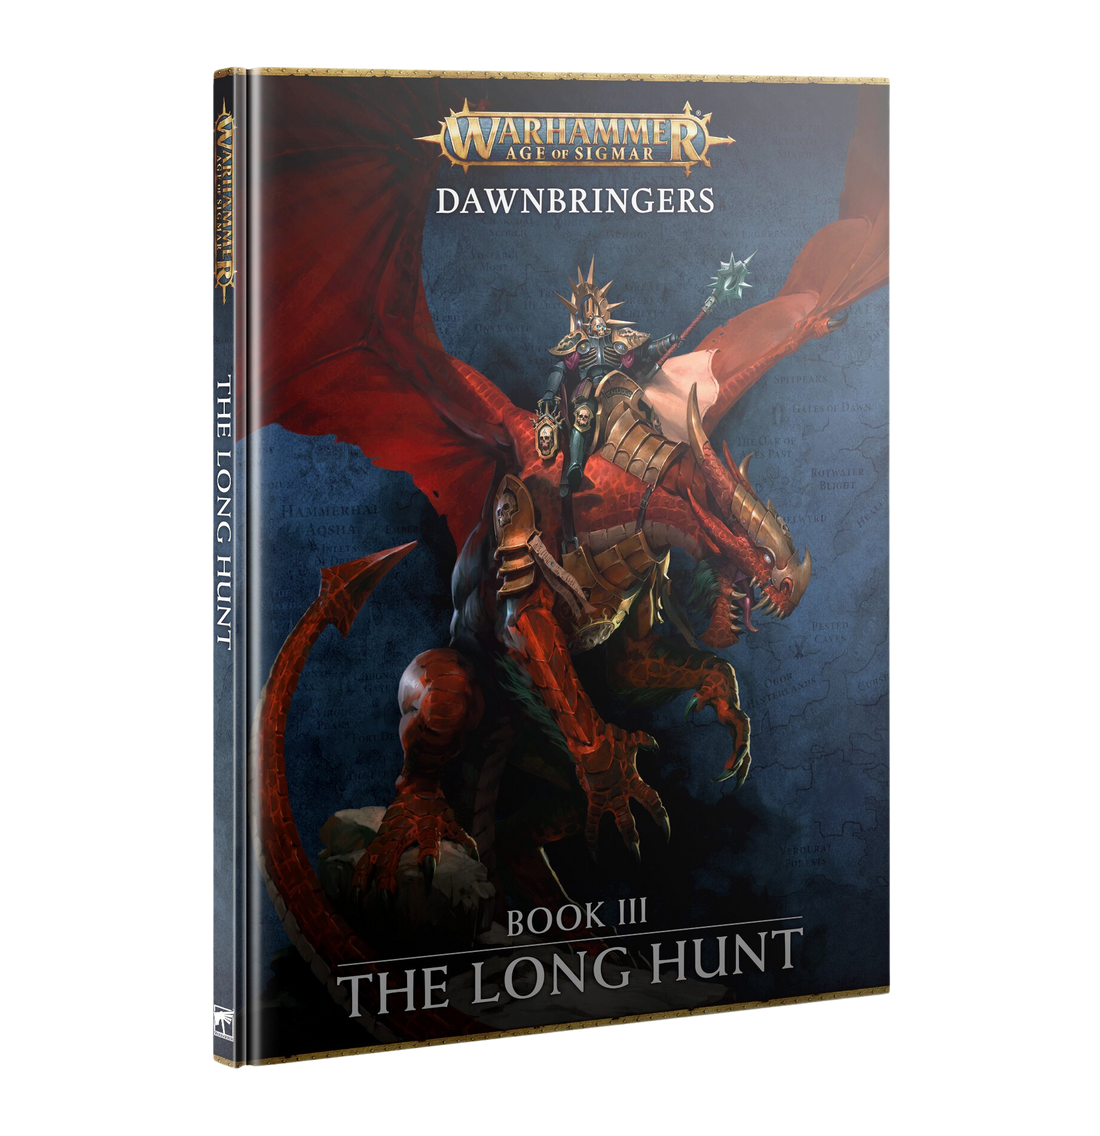 Dawnbringers: Book III – The Long Hunt